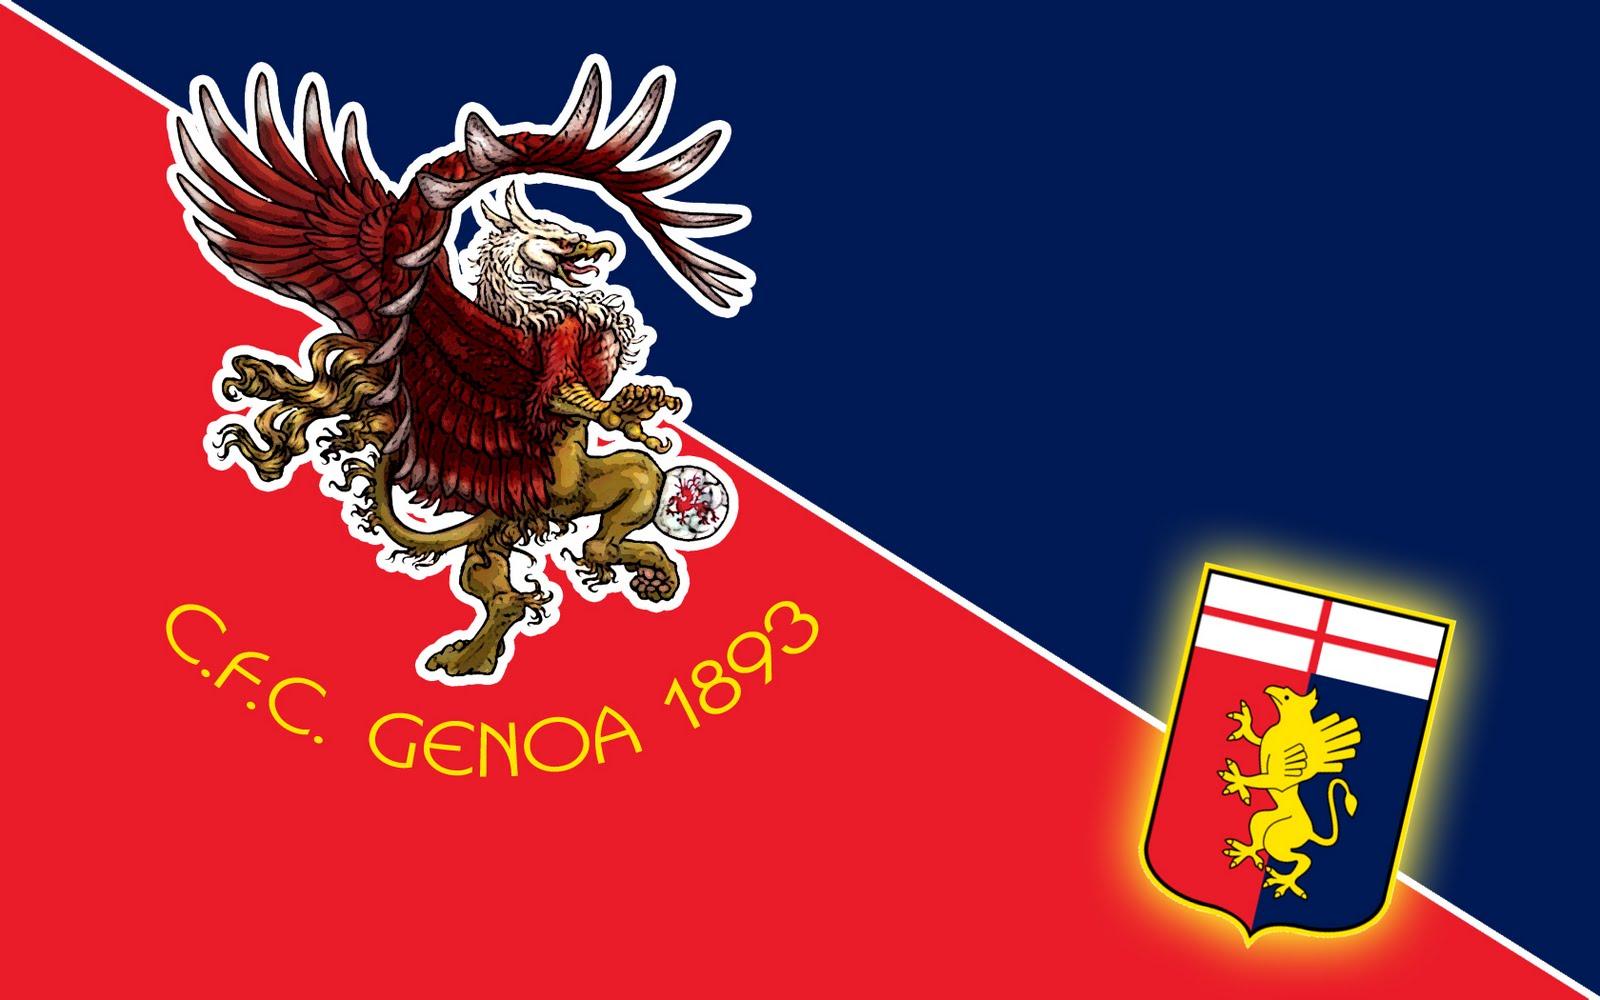 Genoa Wallpaper Image